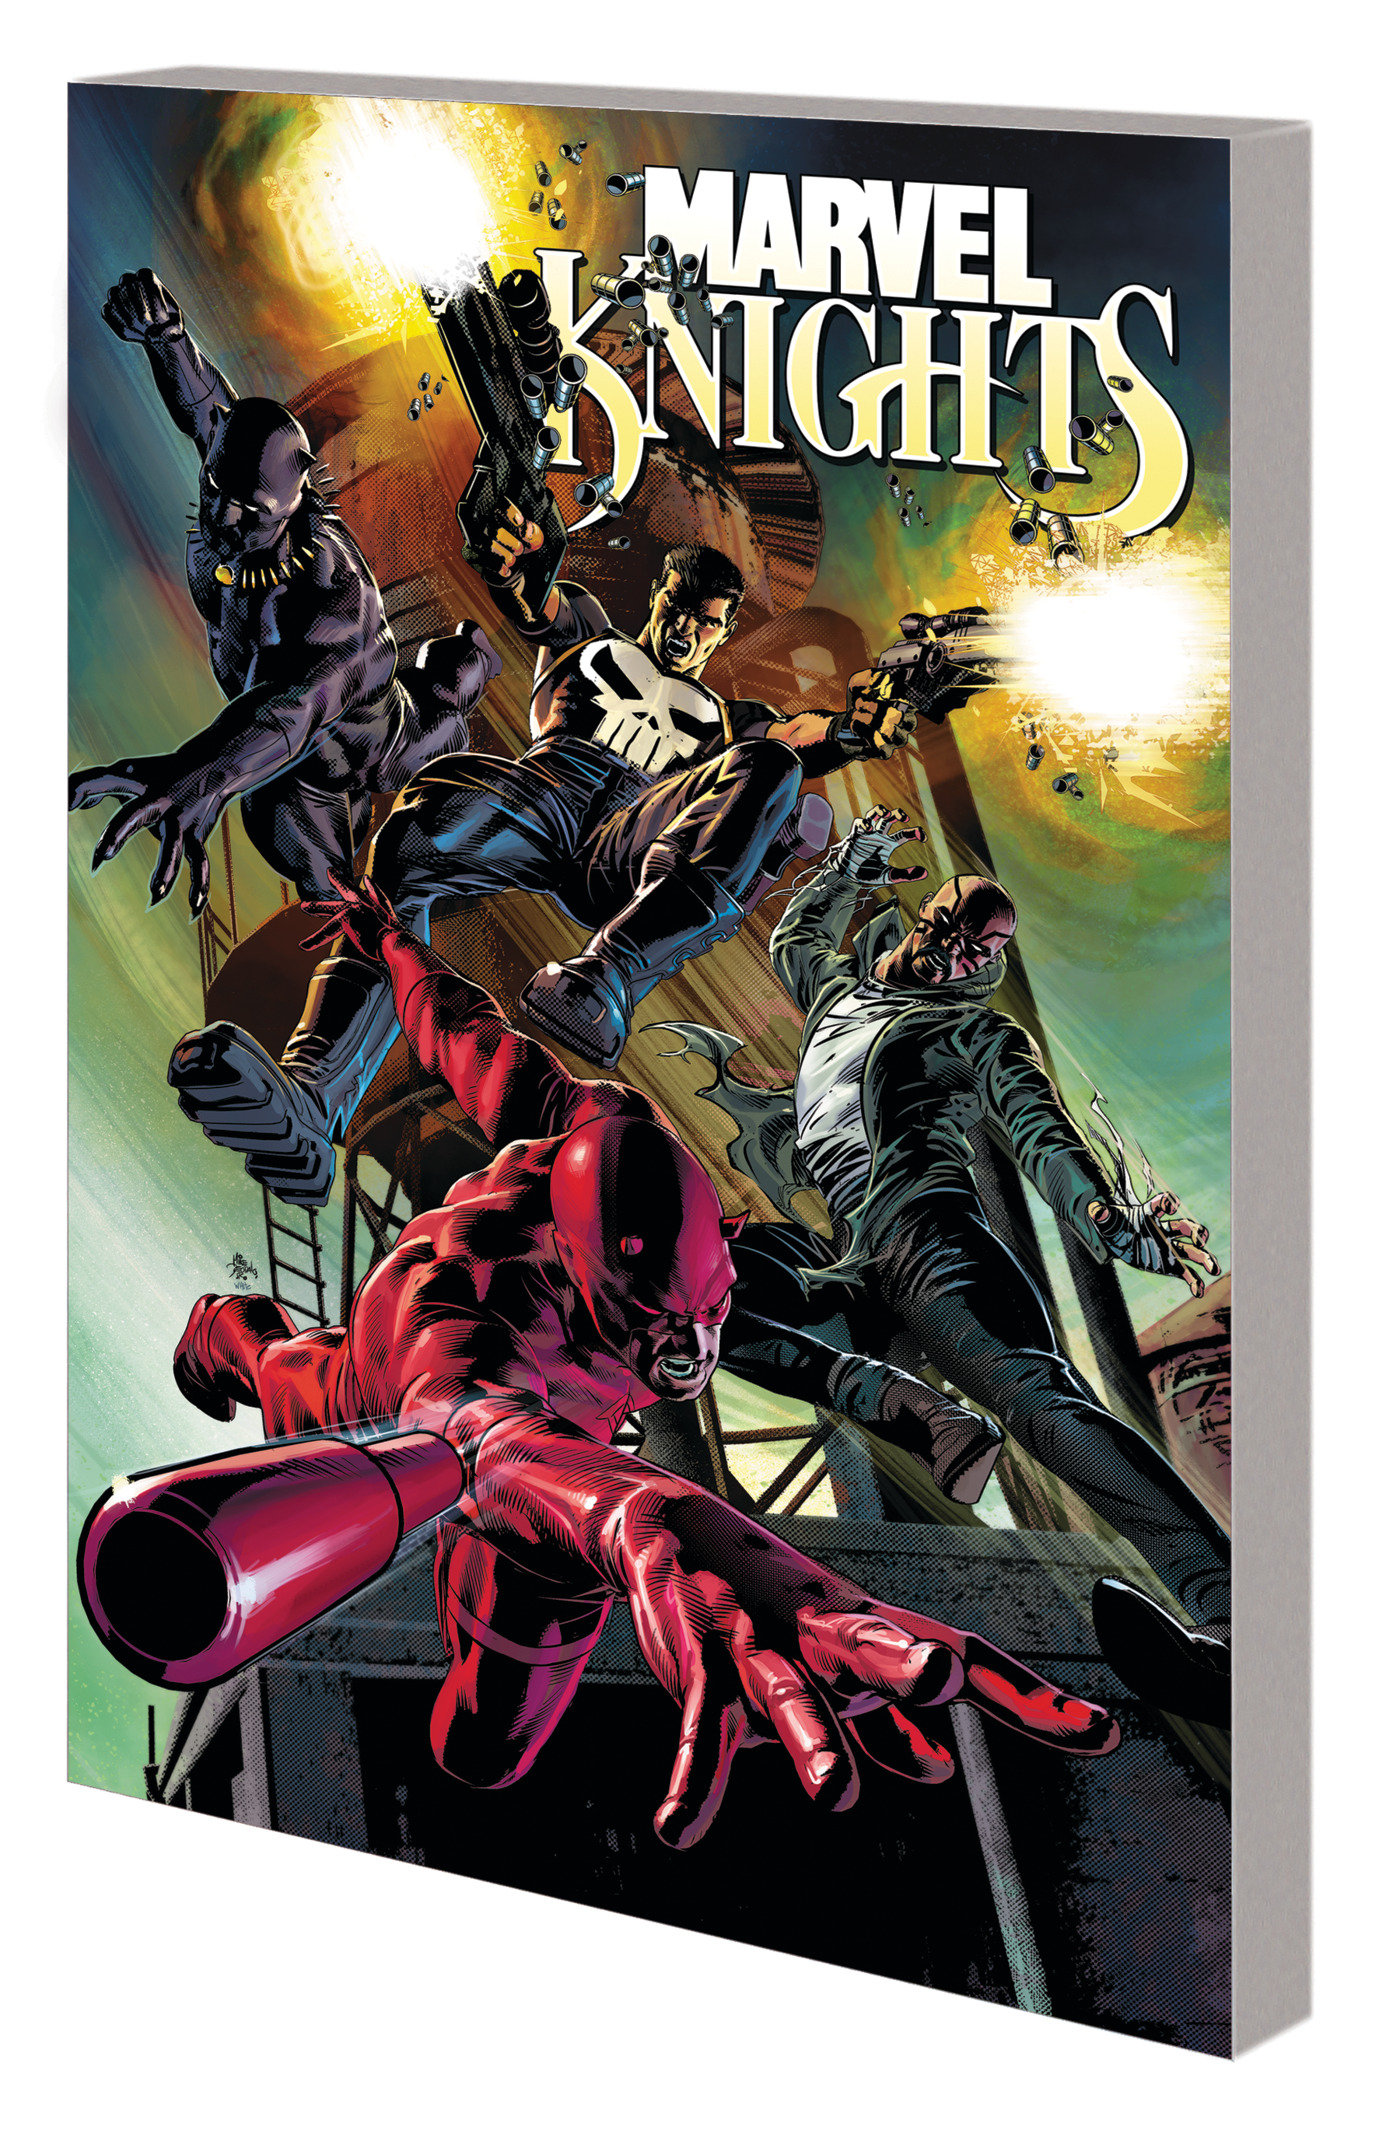 Marvel Knights Graphic Novel Make World Go Away